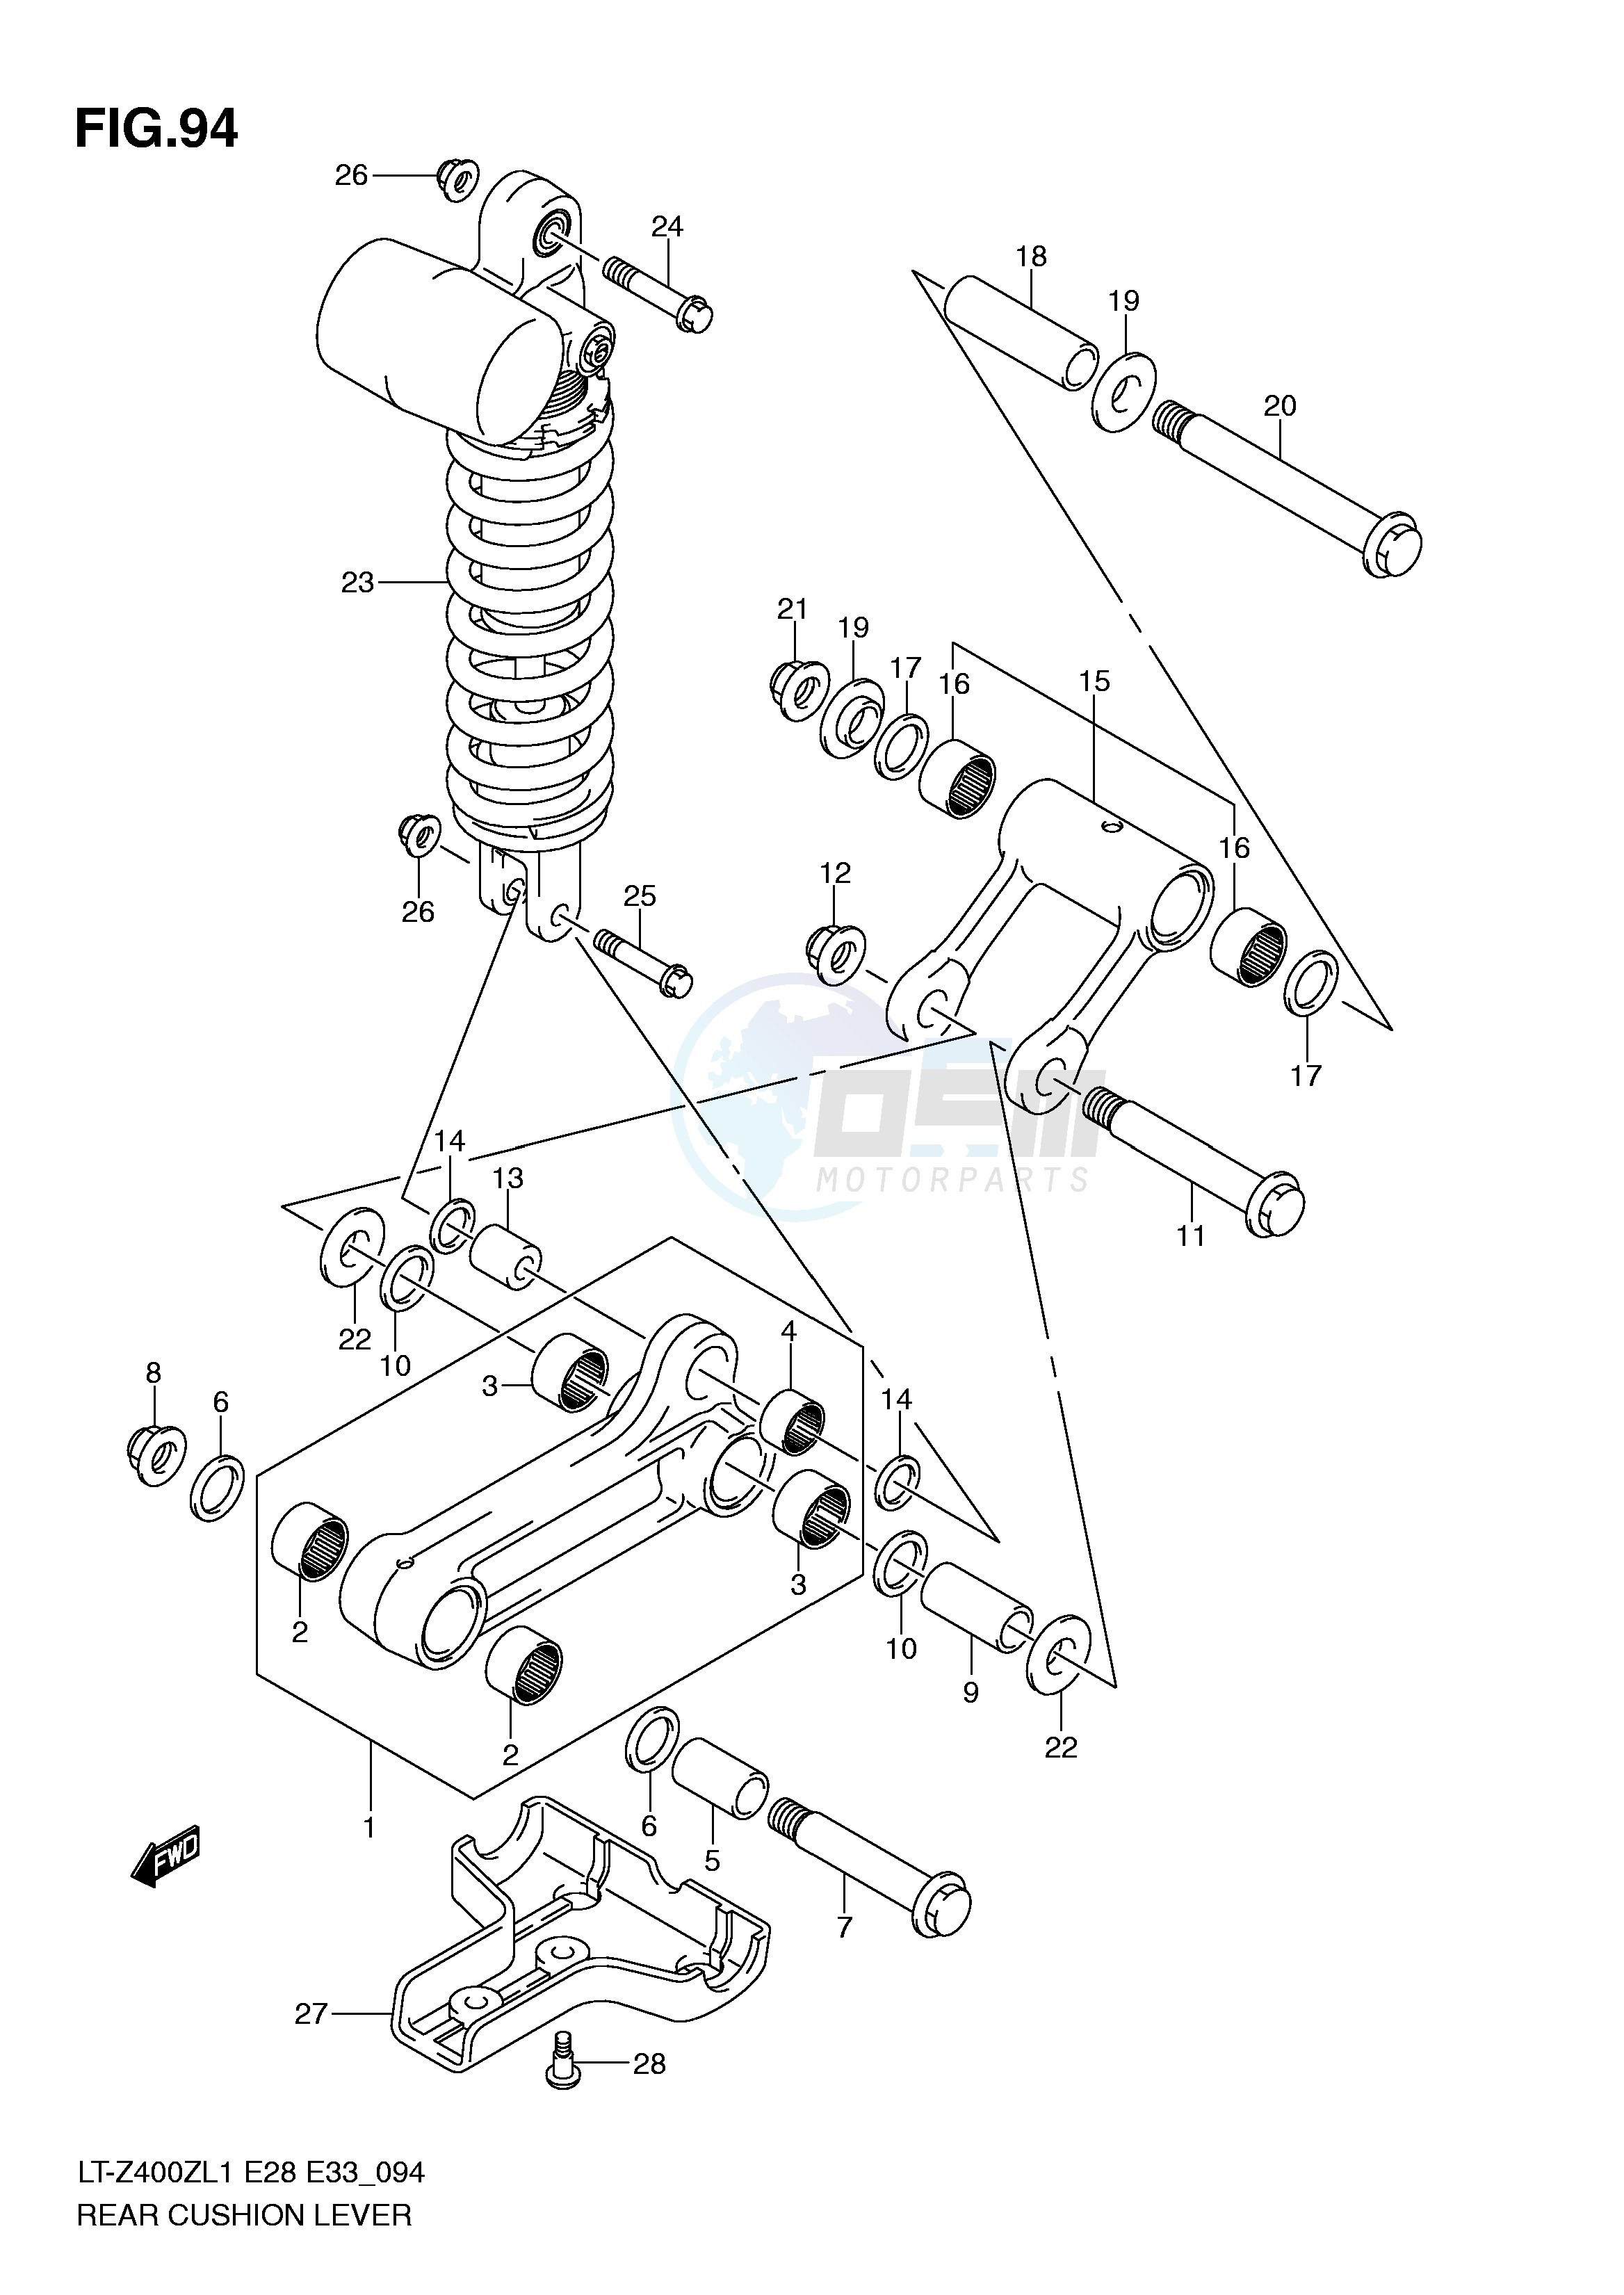 REAR CUSHION LEVER (LT-Z400L1 E33) blueprint